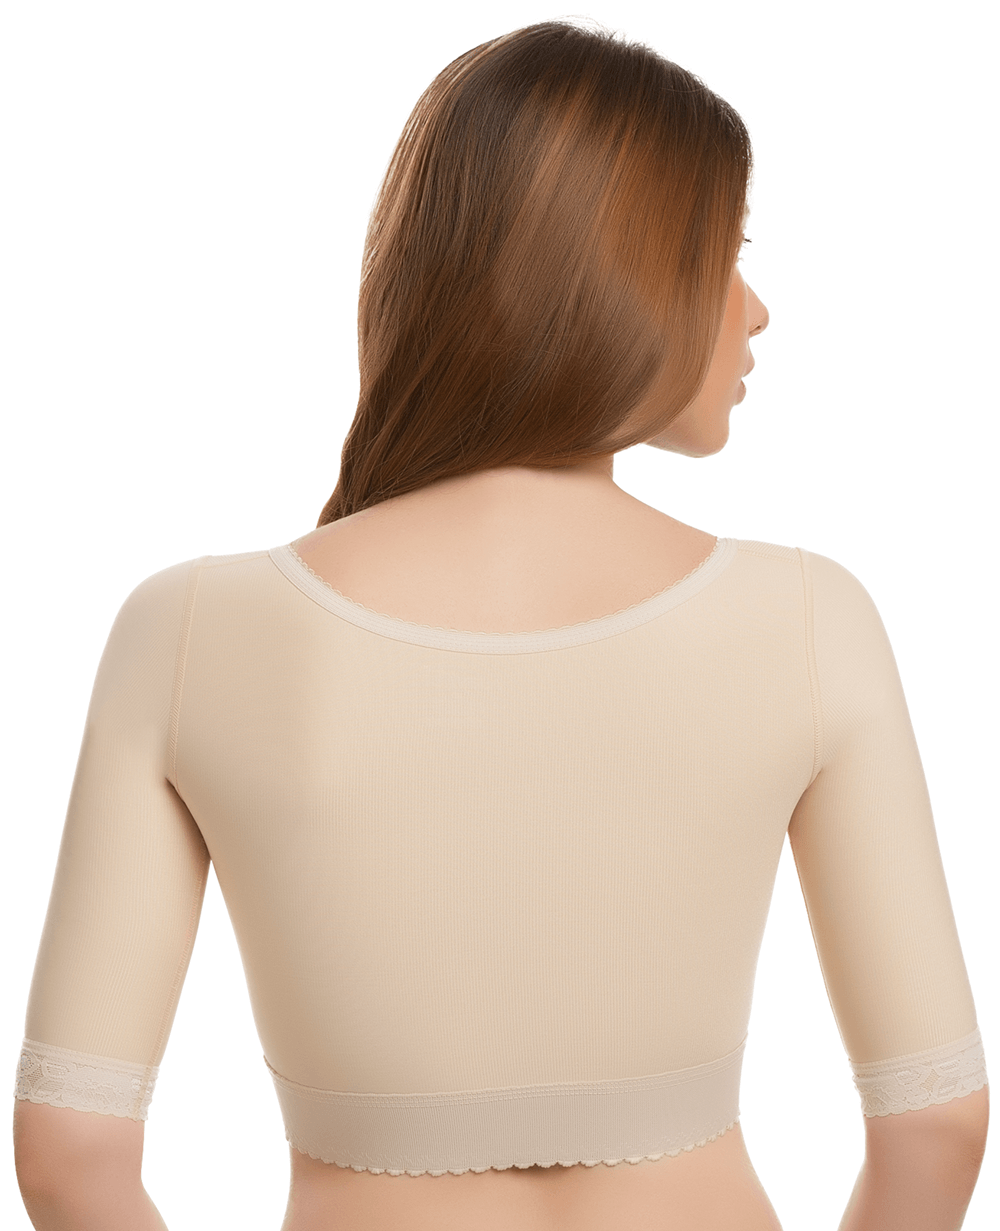 Underbust Length Bra/Vest with Short Sleeves (VS02-SS)